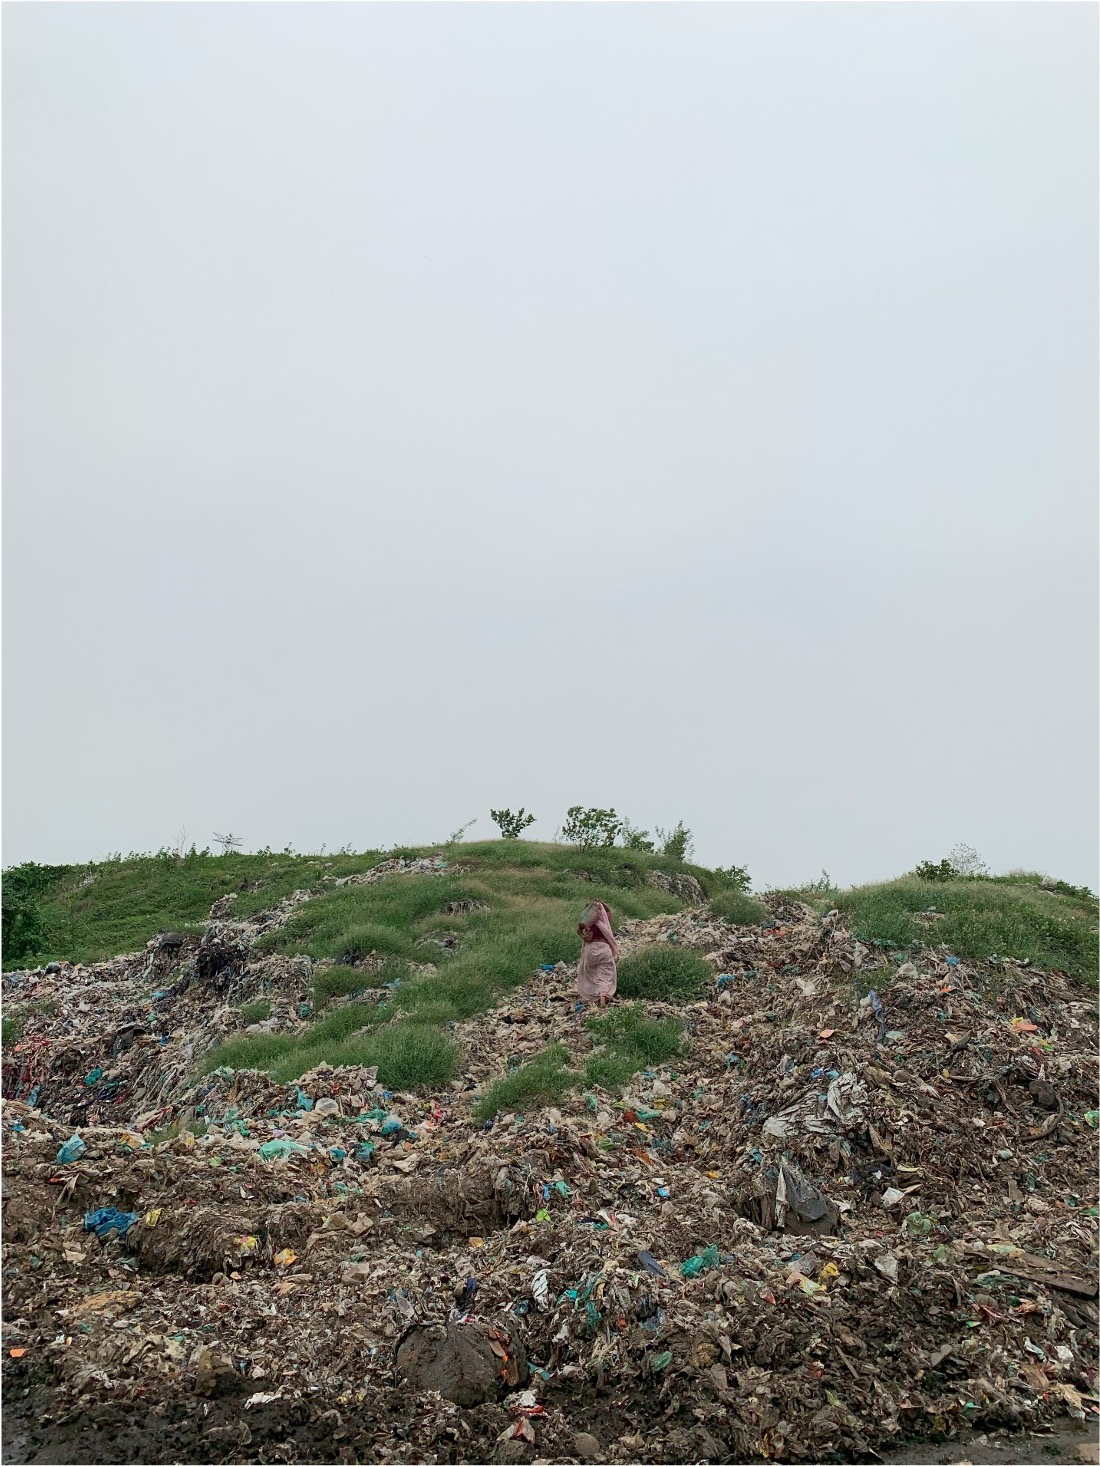 A road in-progress of being built alongside the landfill. © Dev Patel, 2023